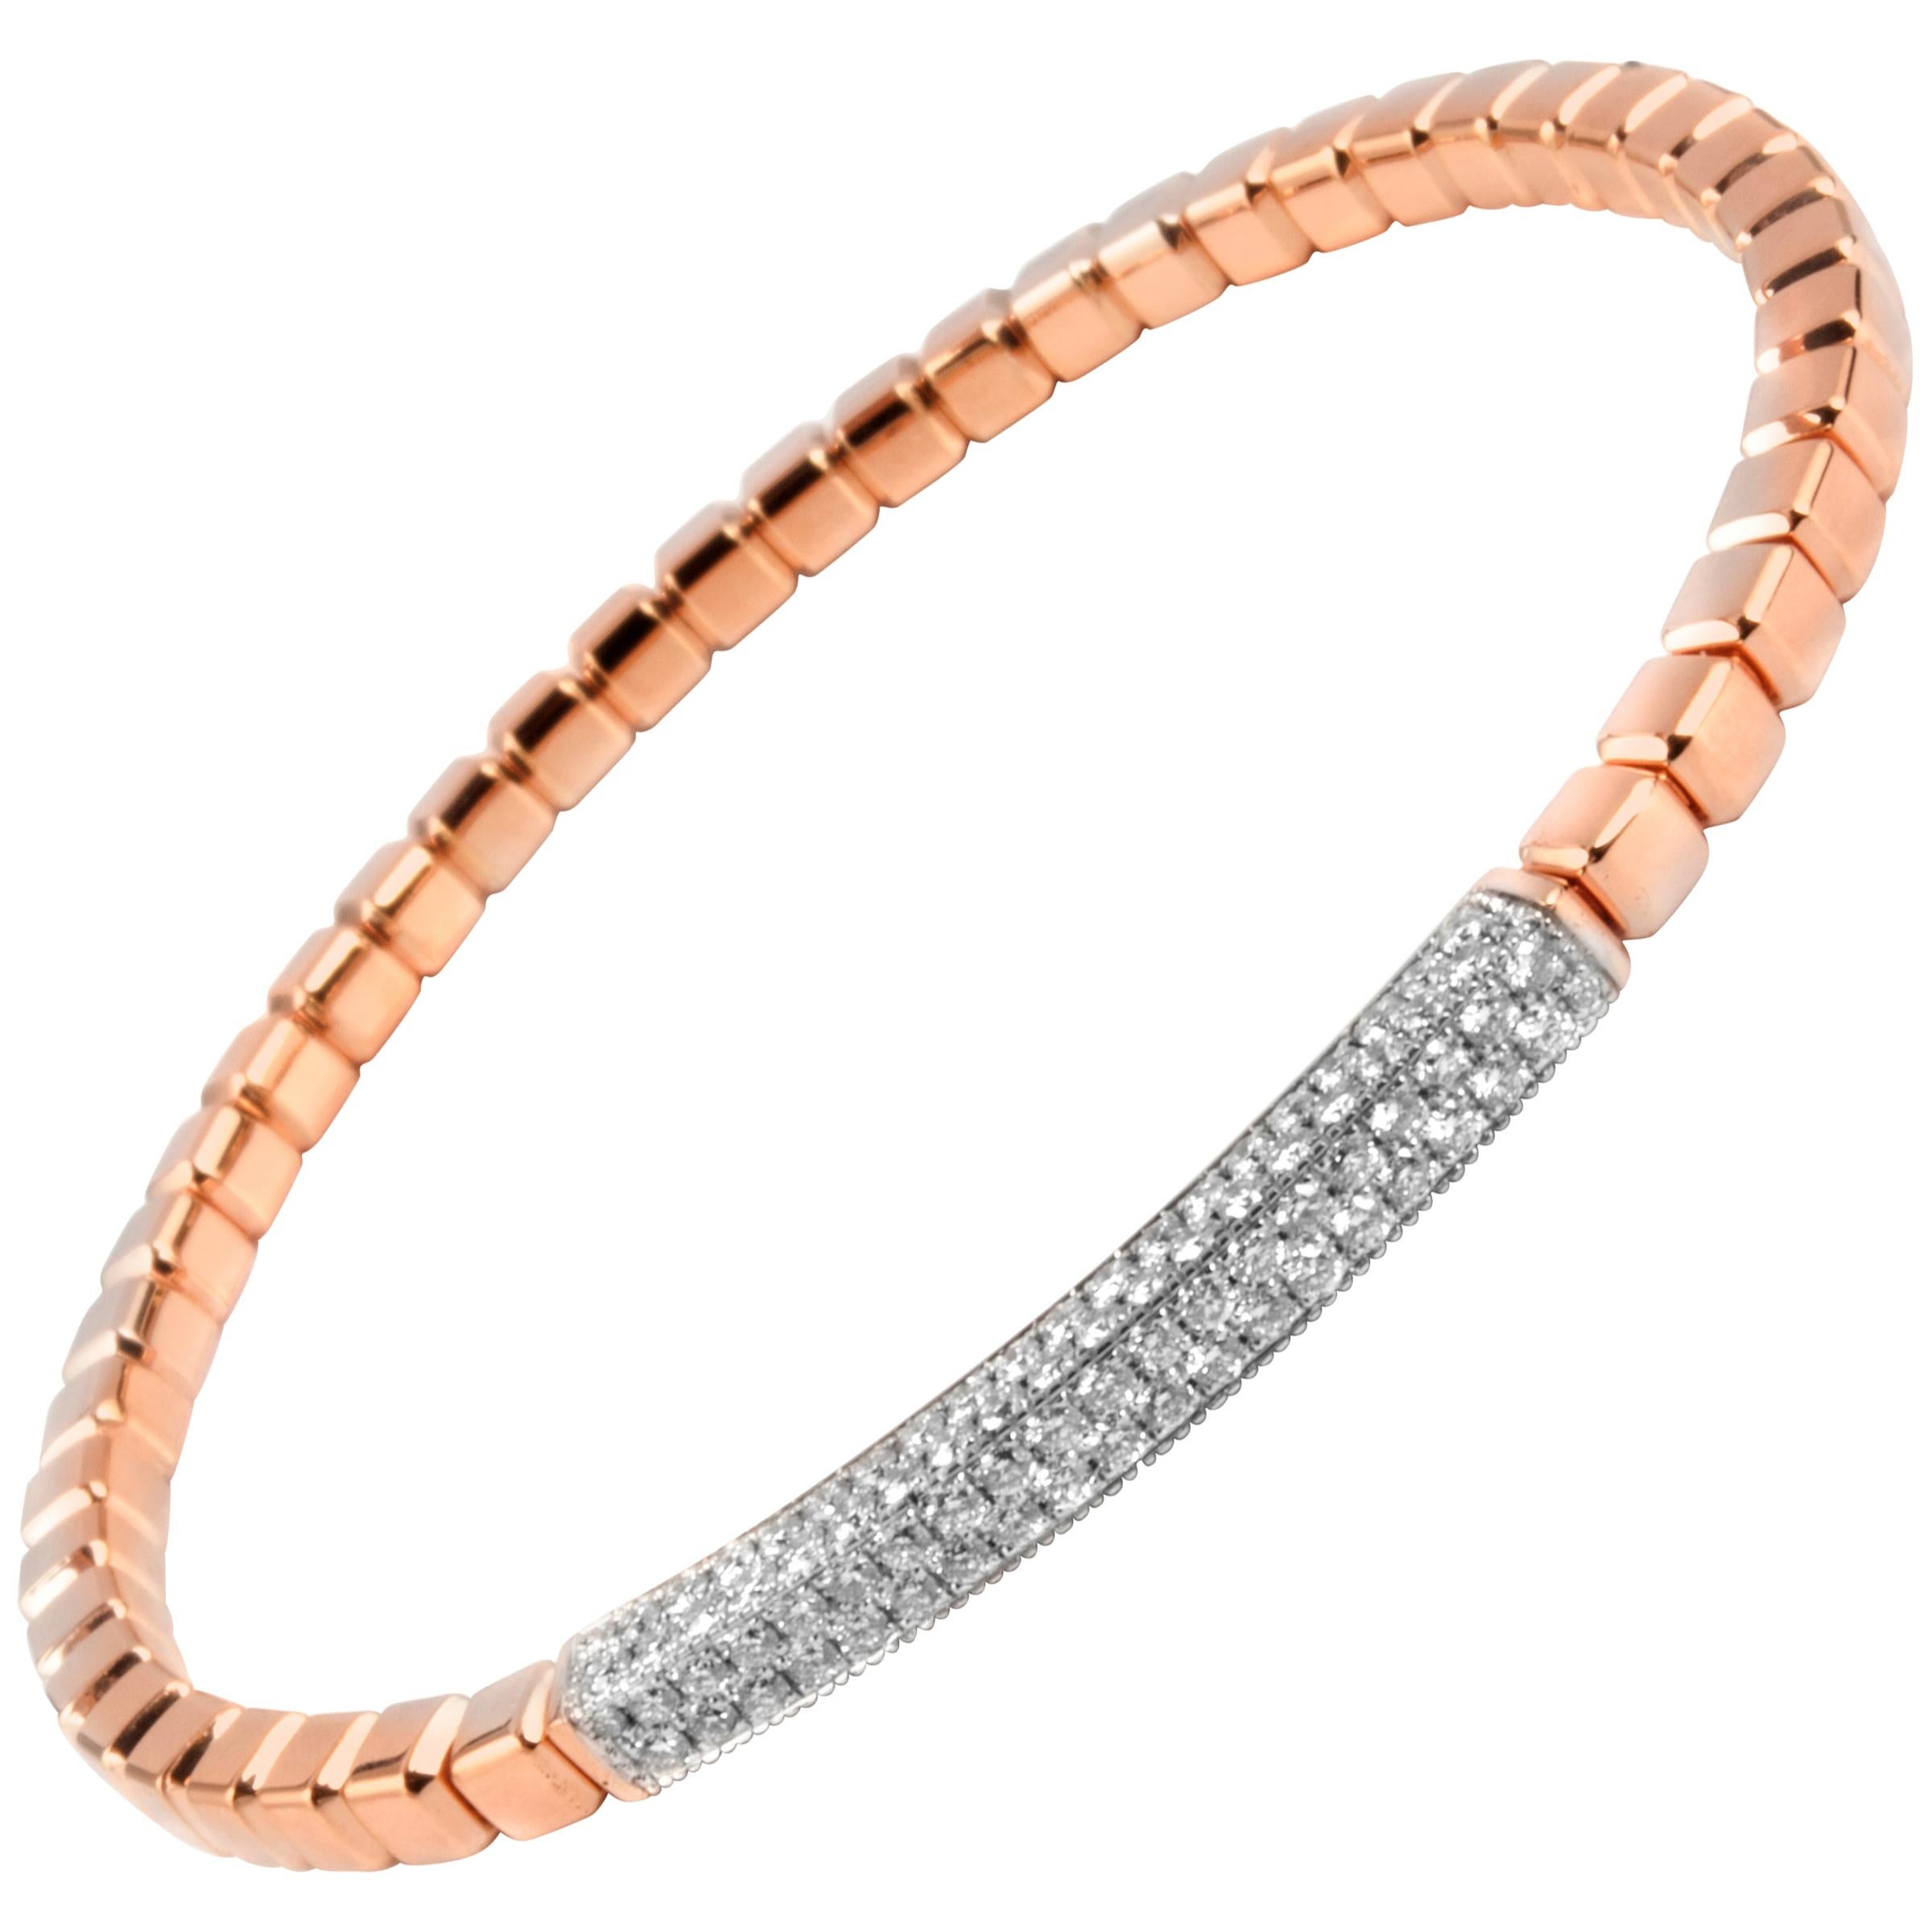 Quadro Id Bracelet in 18 Karat Rose Gold and White Diamonds - Medium